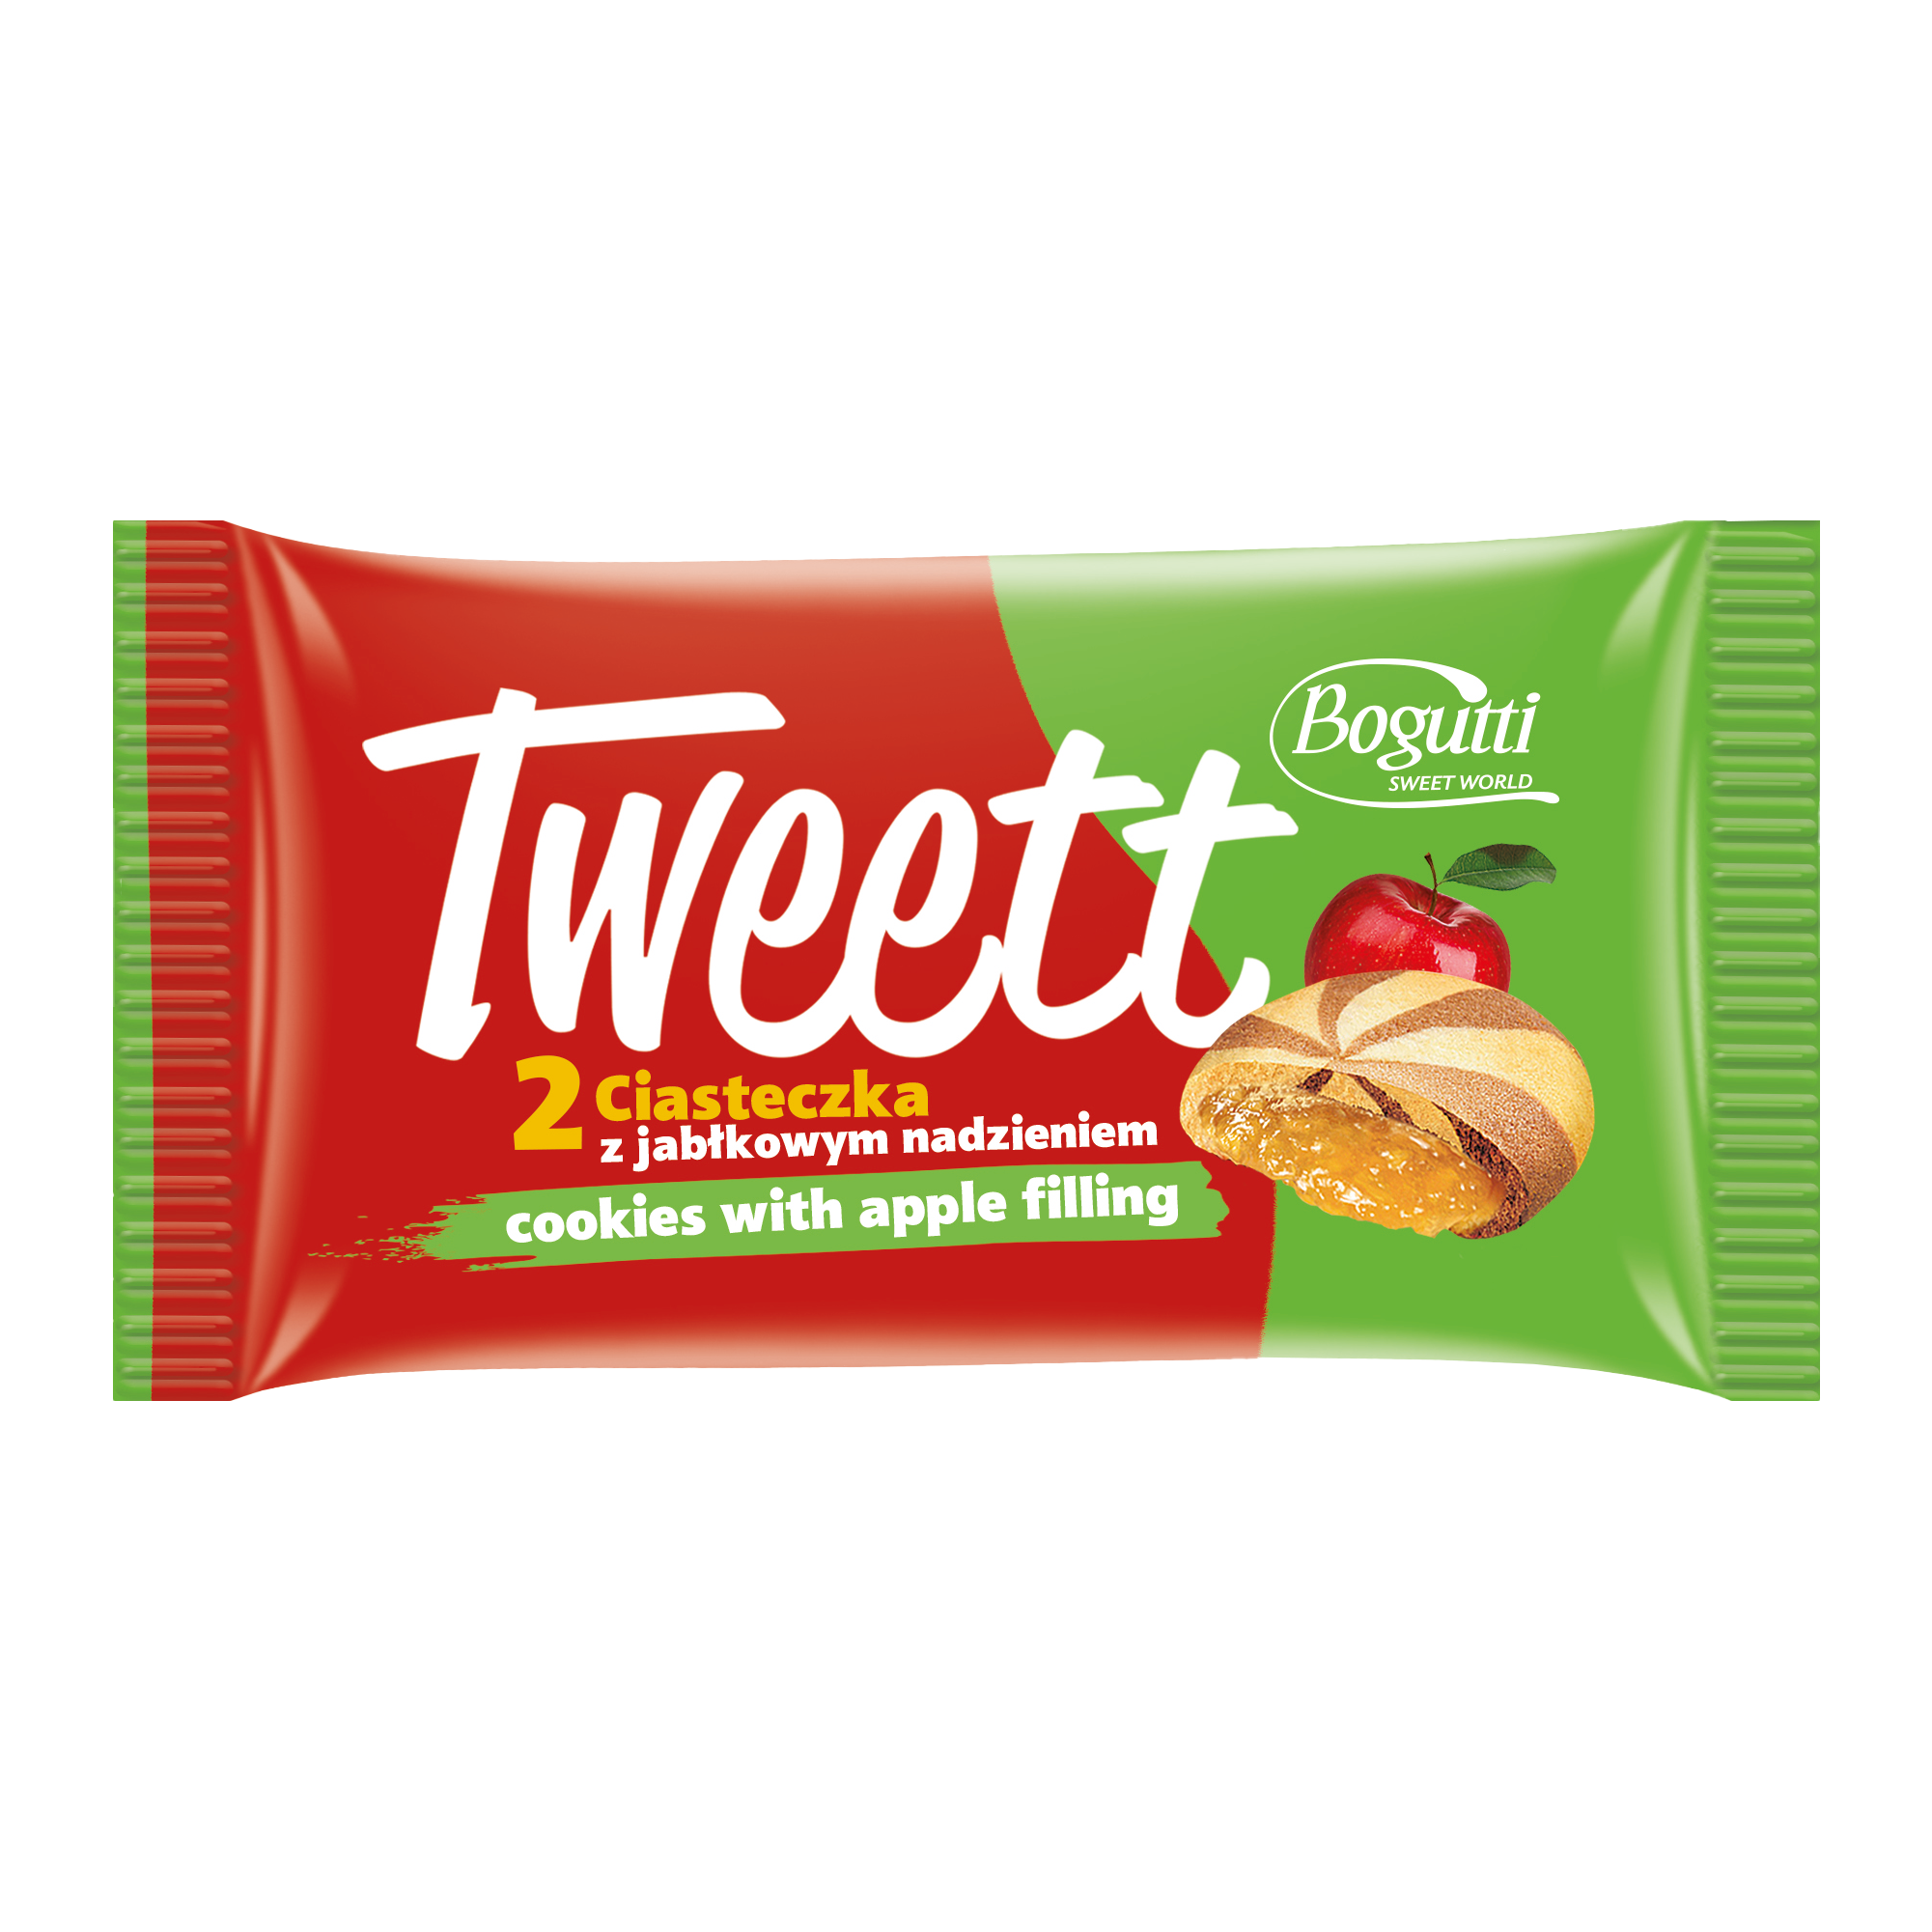 Tweett – Cookies with apple filling (2 pcs.)